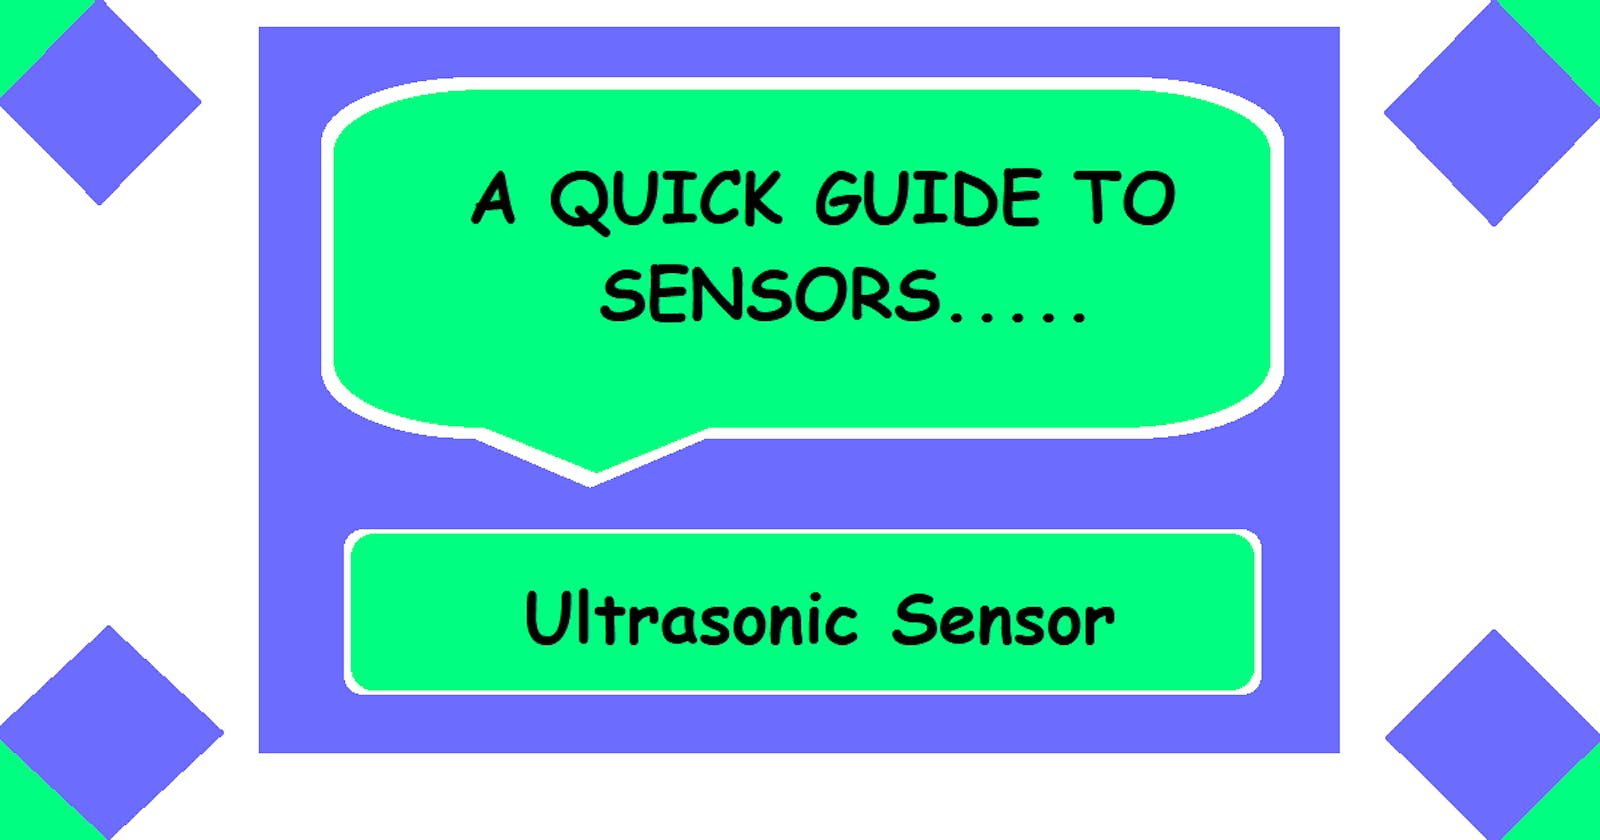 Quick Guide to Ultrasonic Sensor